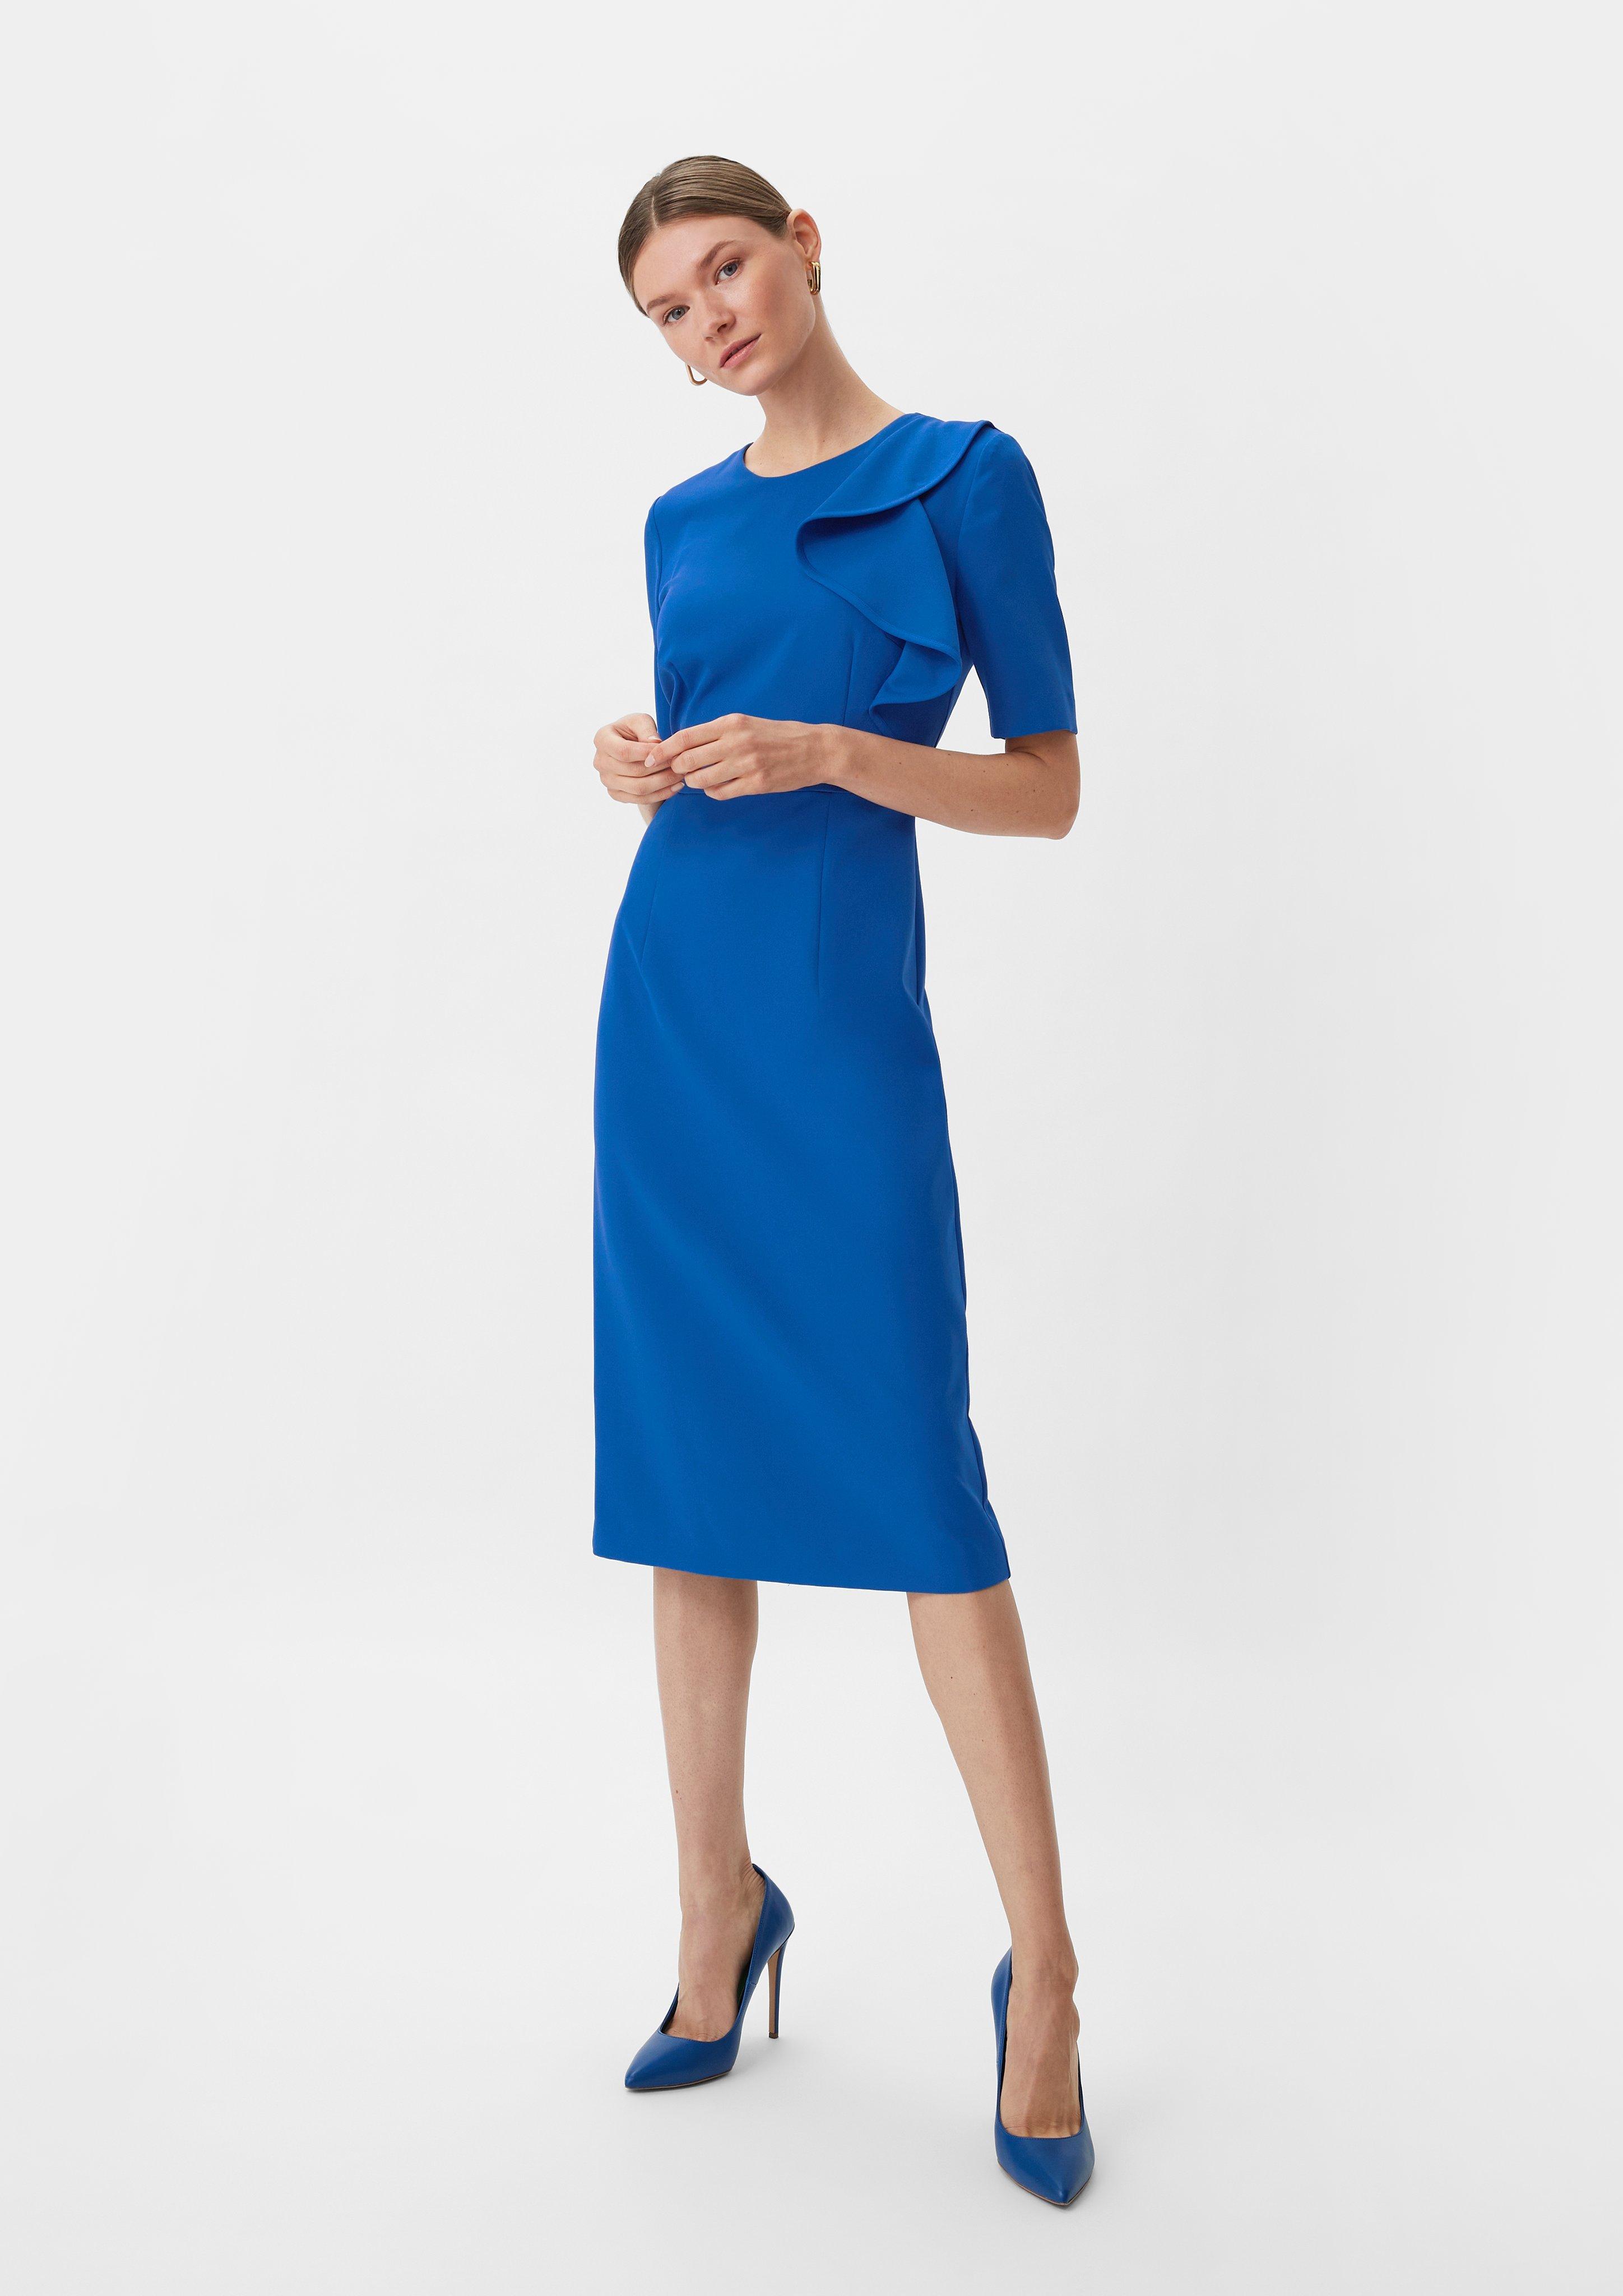 Dress - detail Comma flounce royal with blue | a